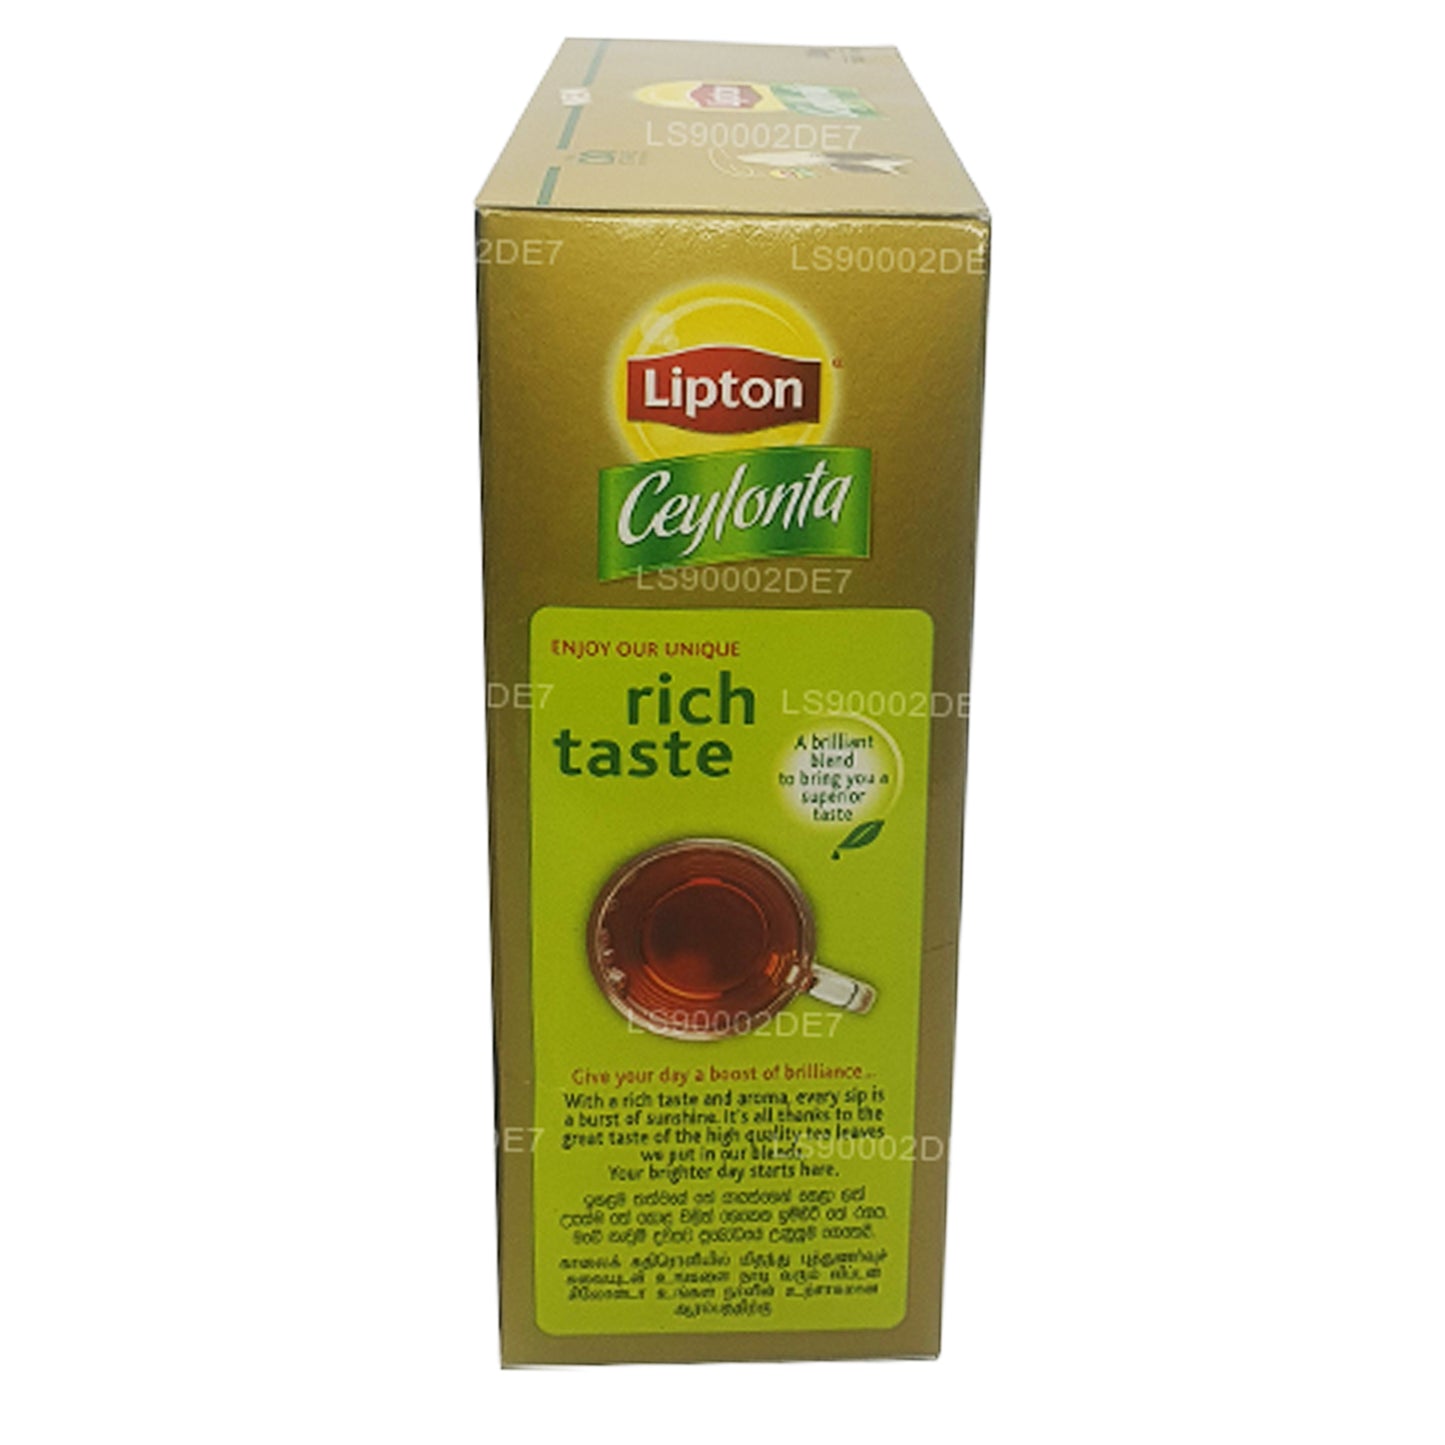 Lipton Ceylonta Herbata (200g) 100 torebek